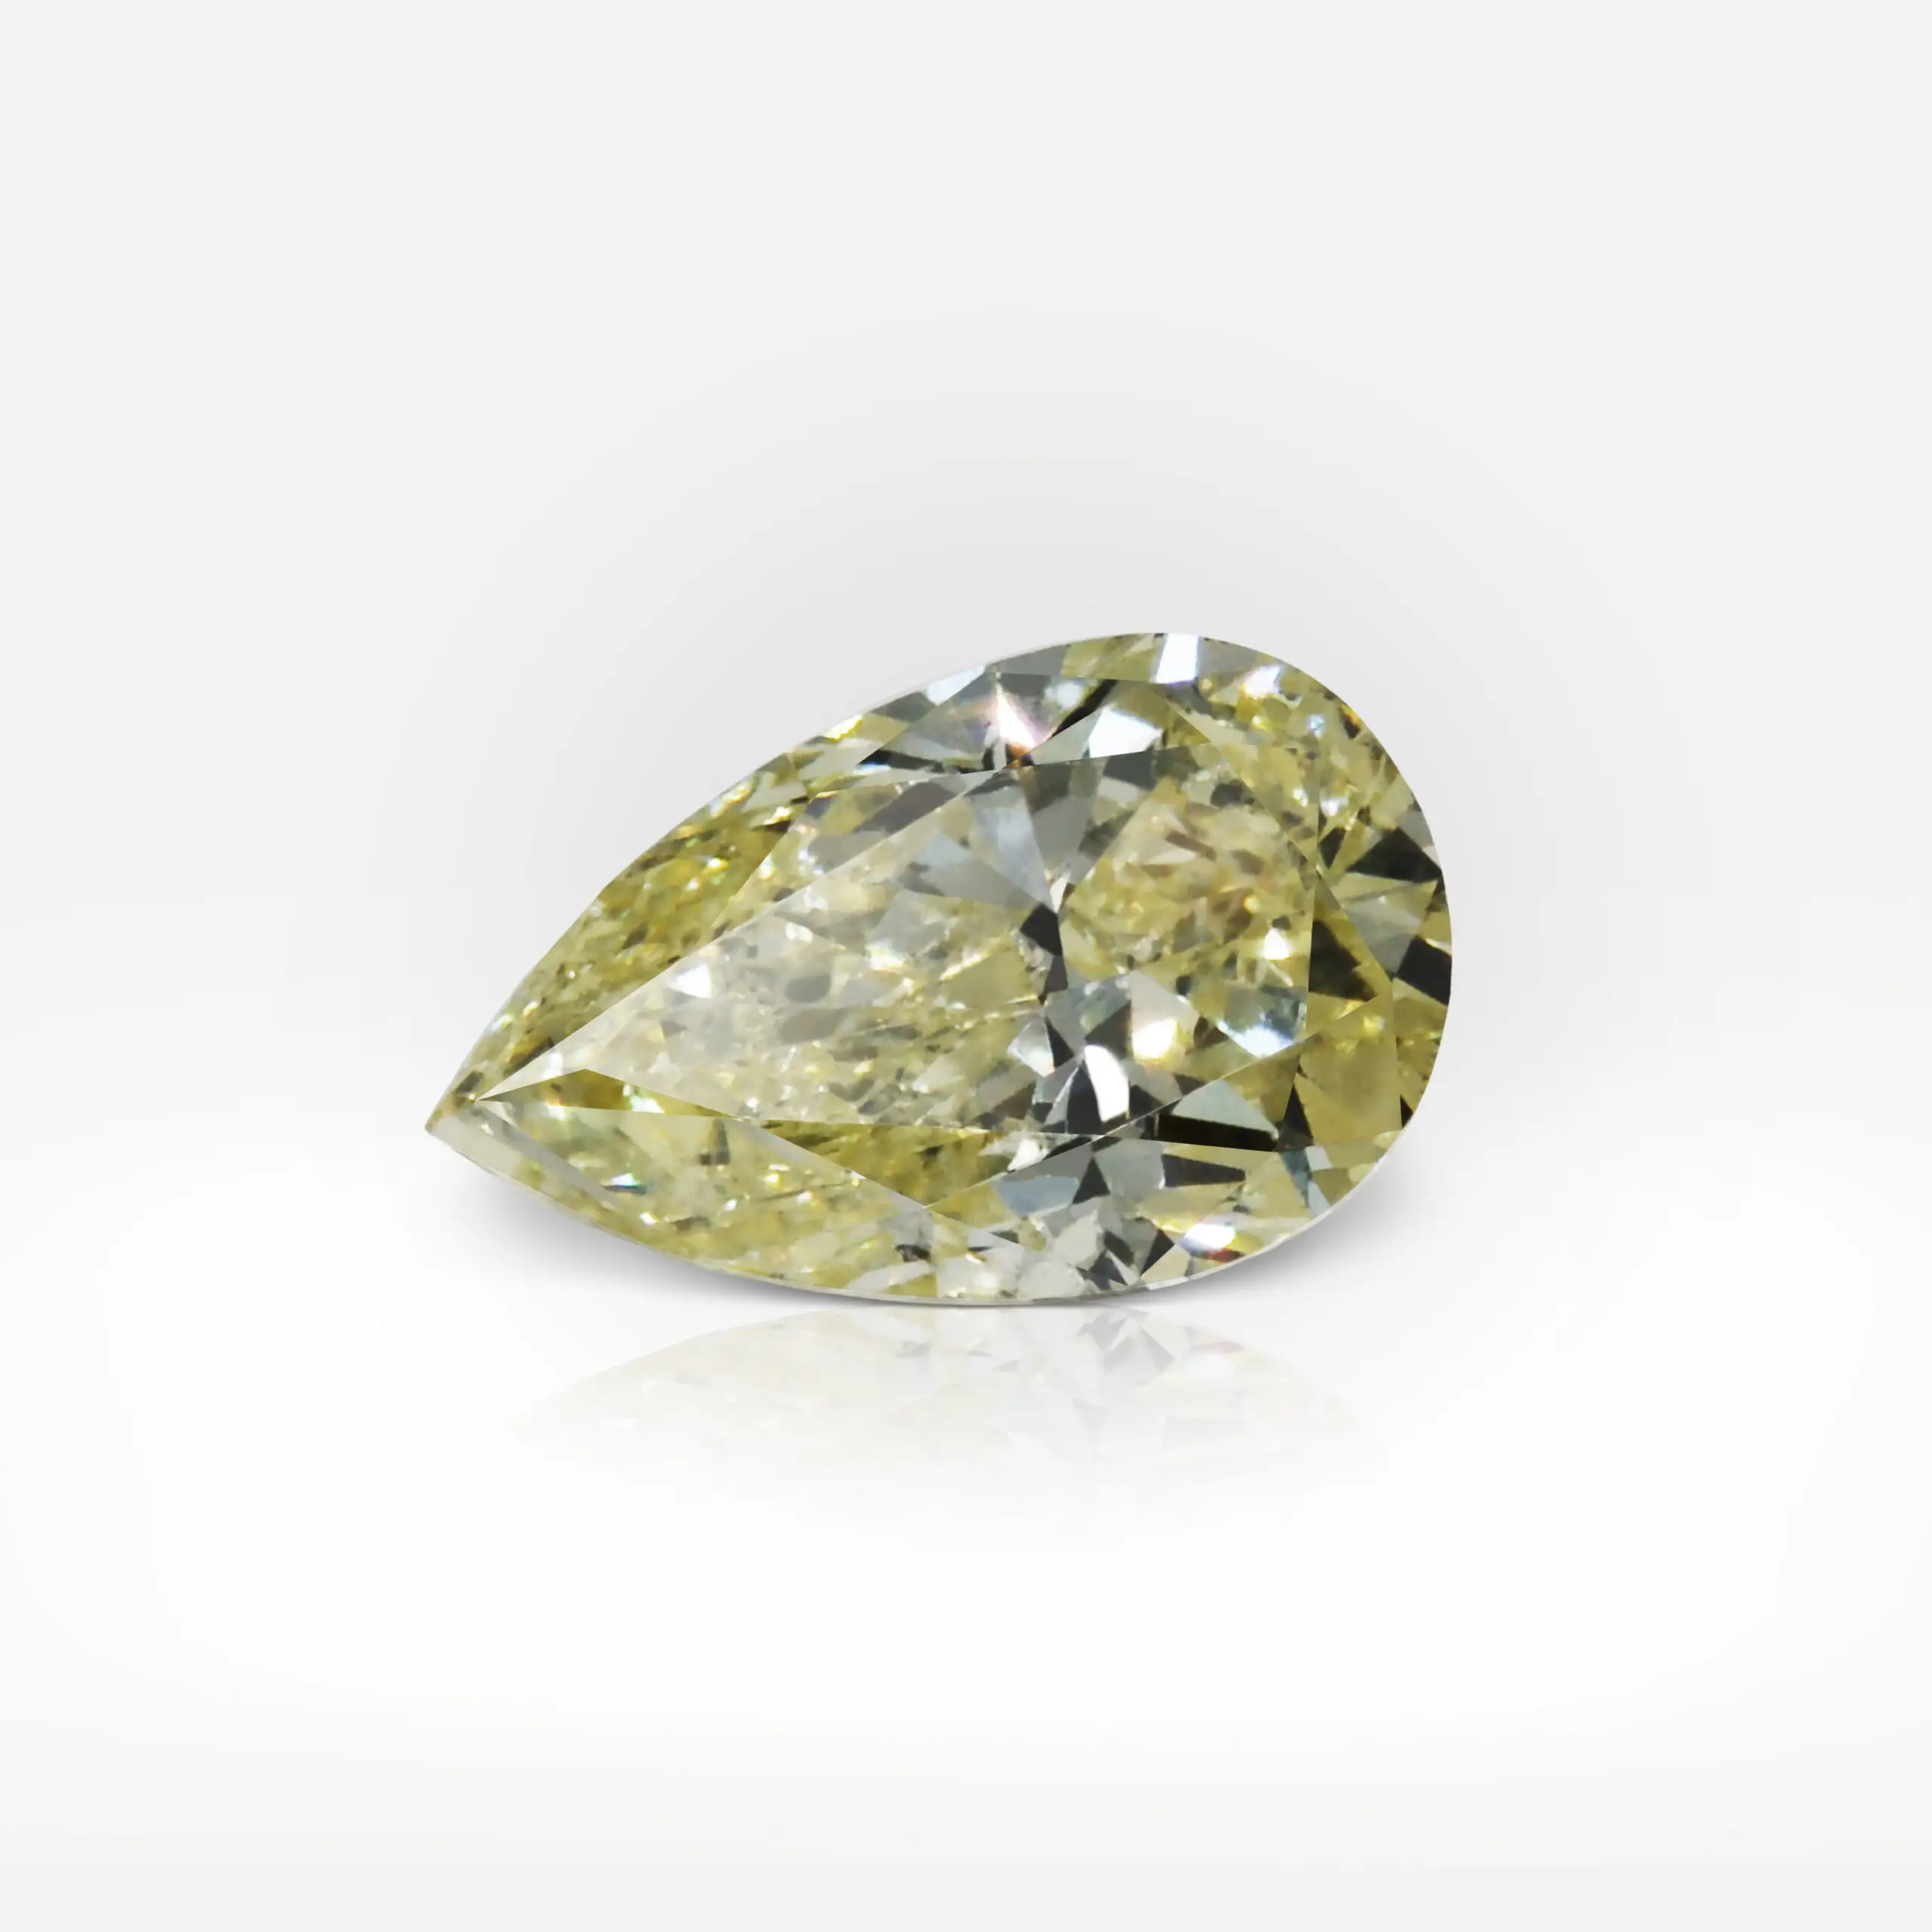 1.04 carat Fancy Light Yellow SI2 Pear Shape Diamond GIA - picture 1